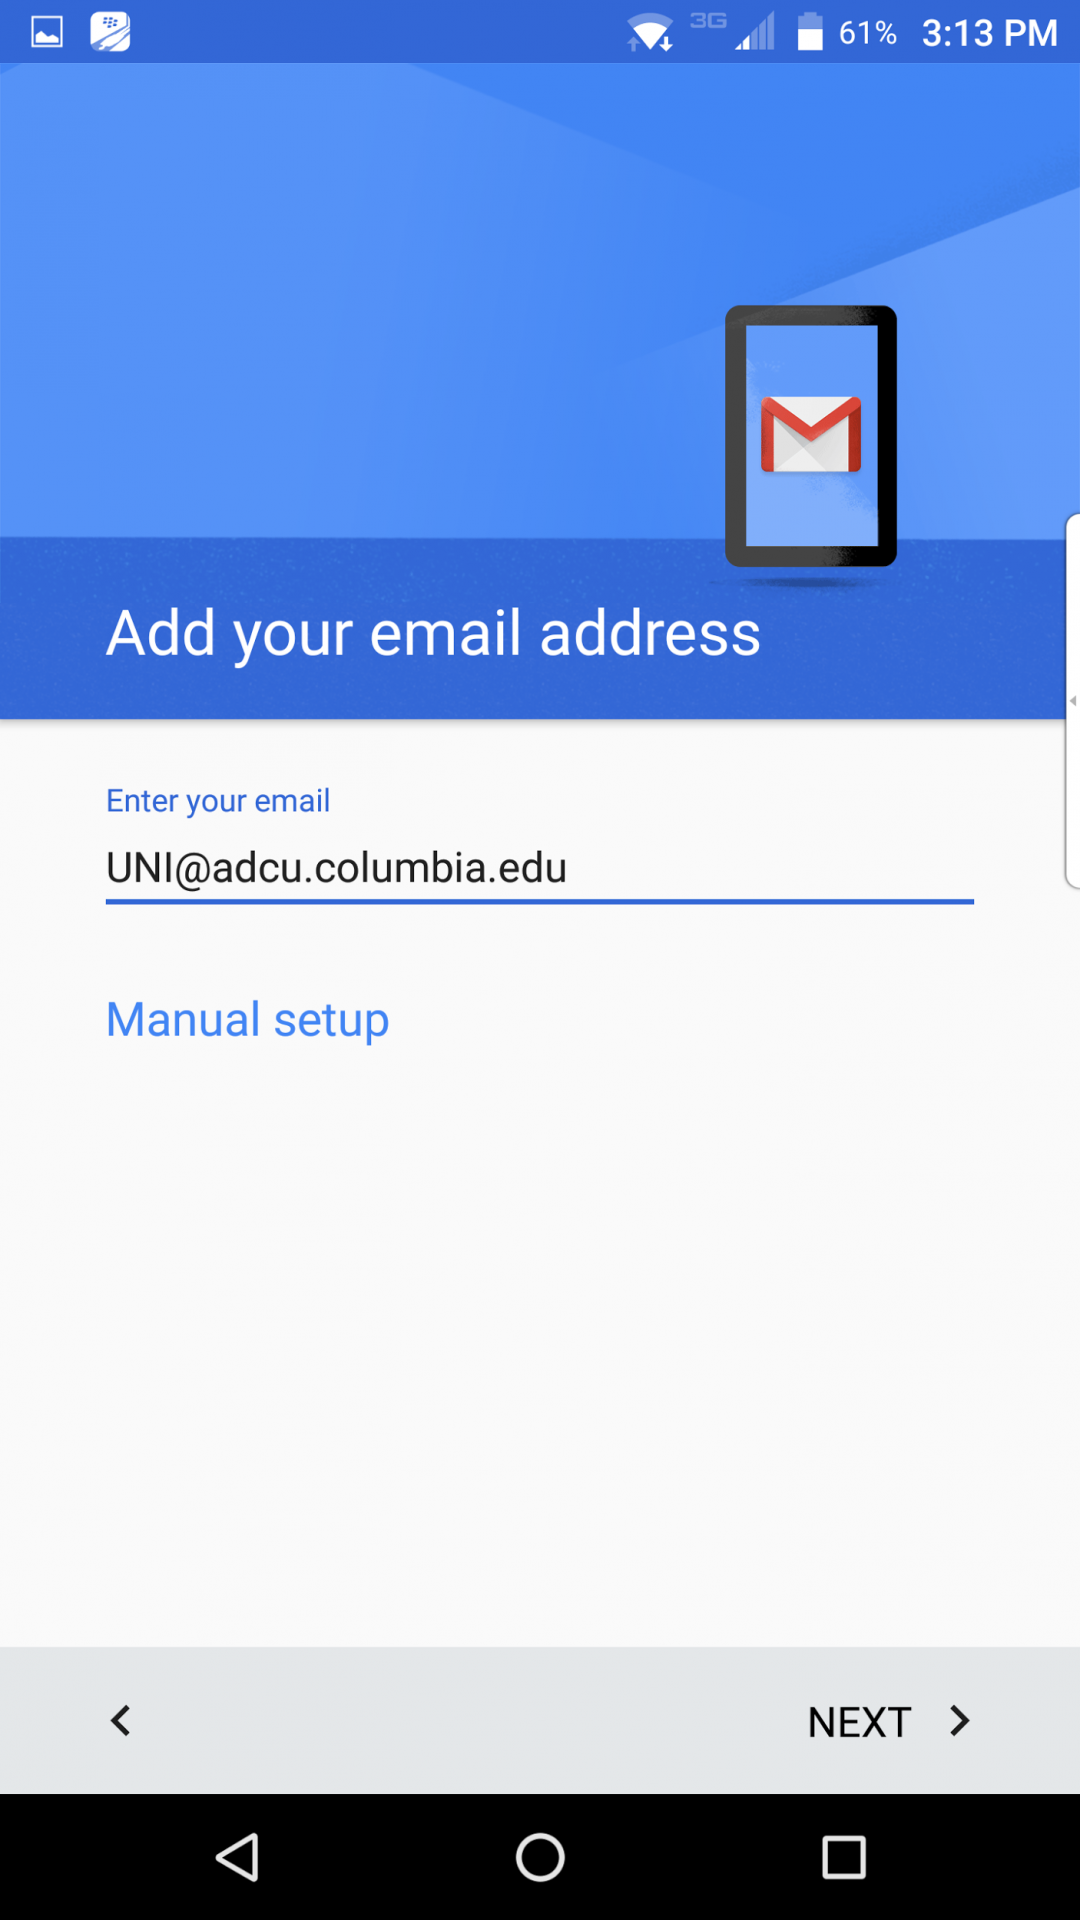 uni@adcu.columbia.edu entered into email field